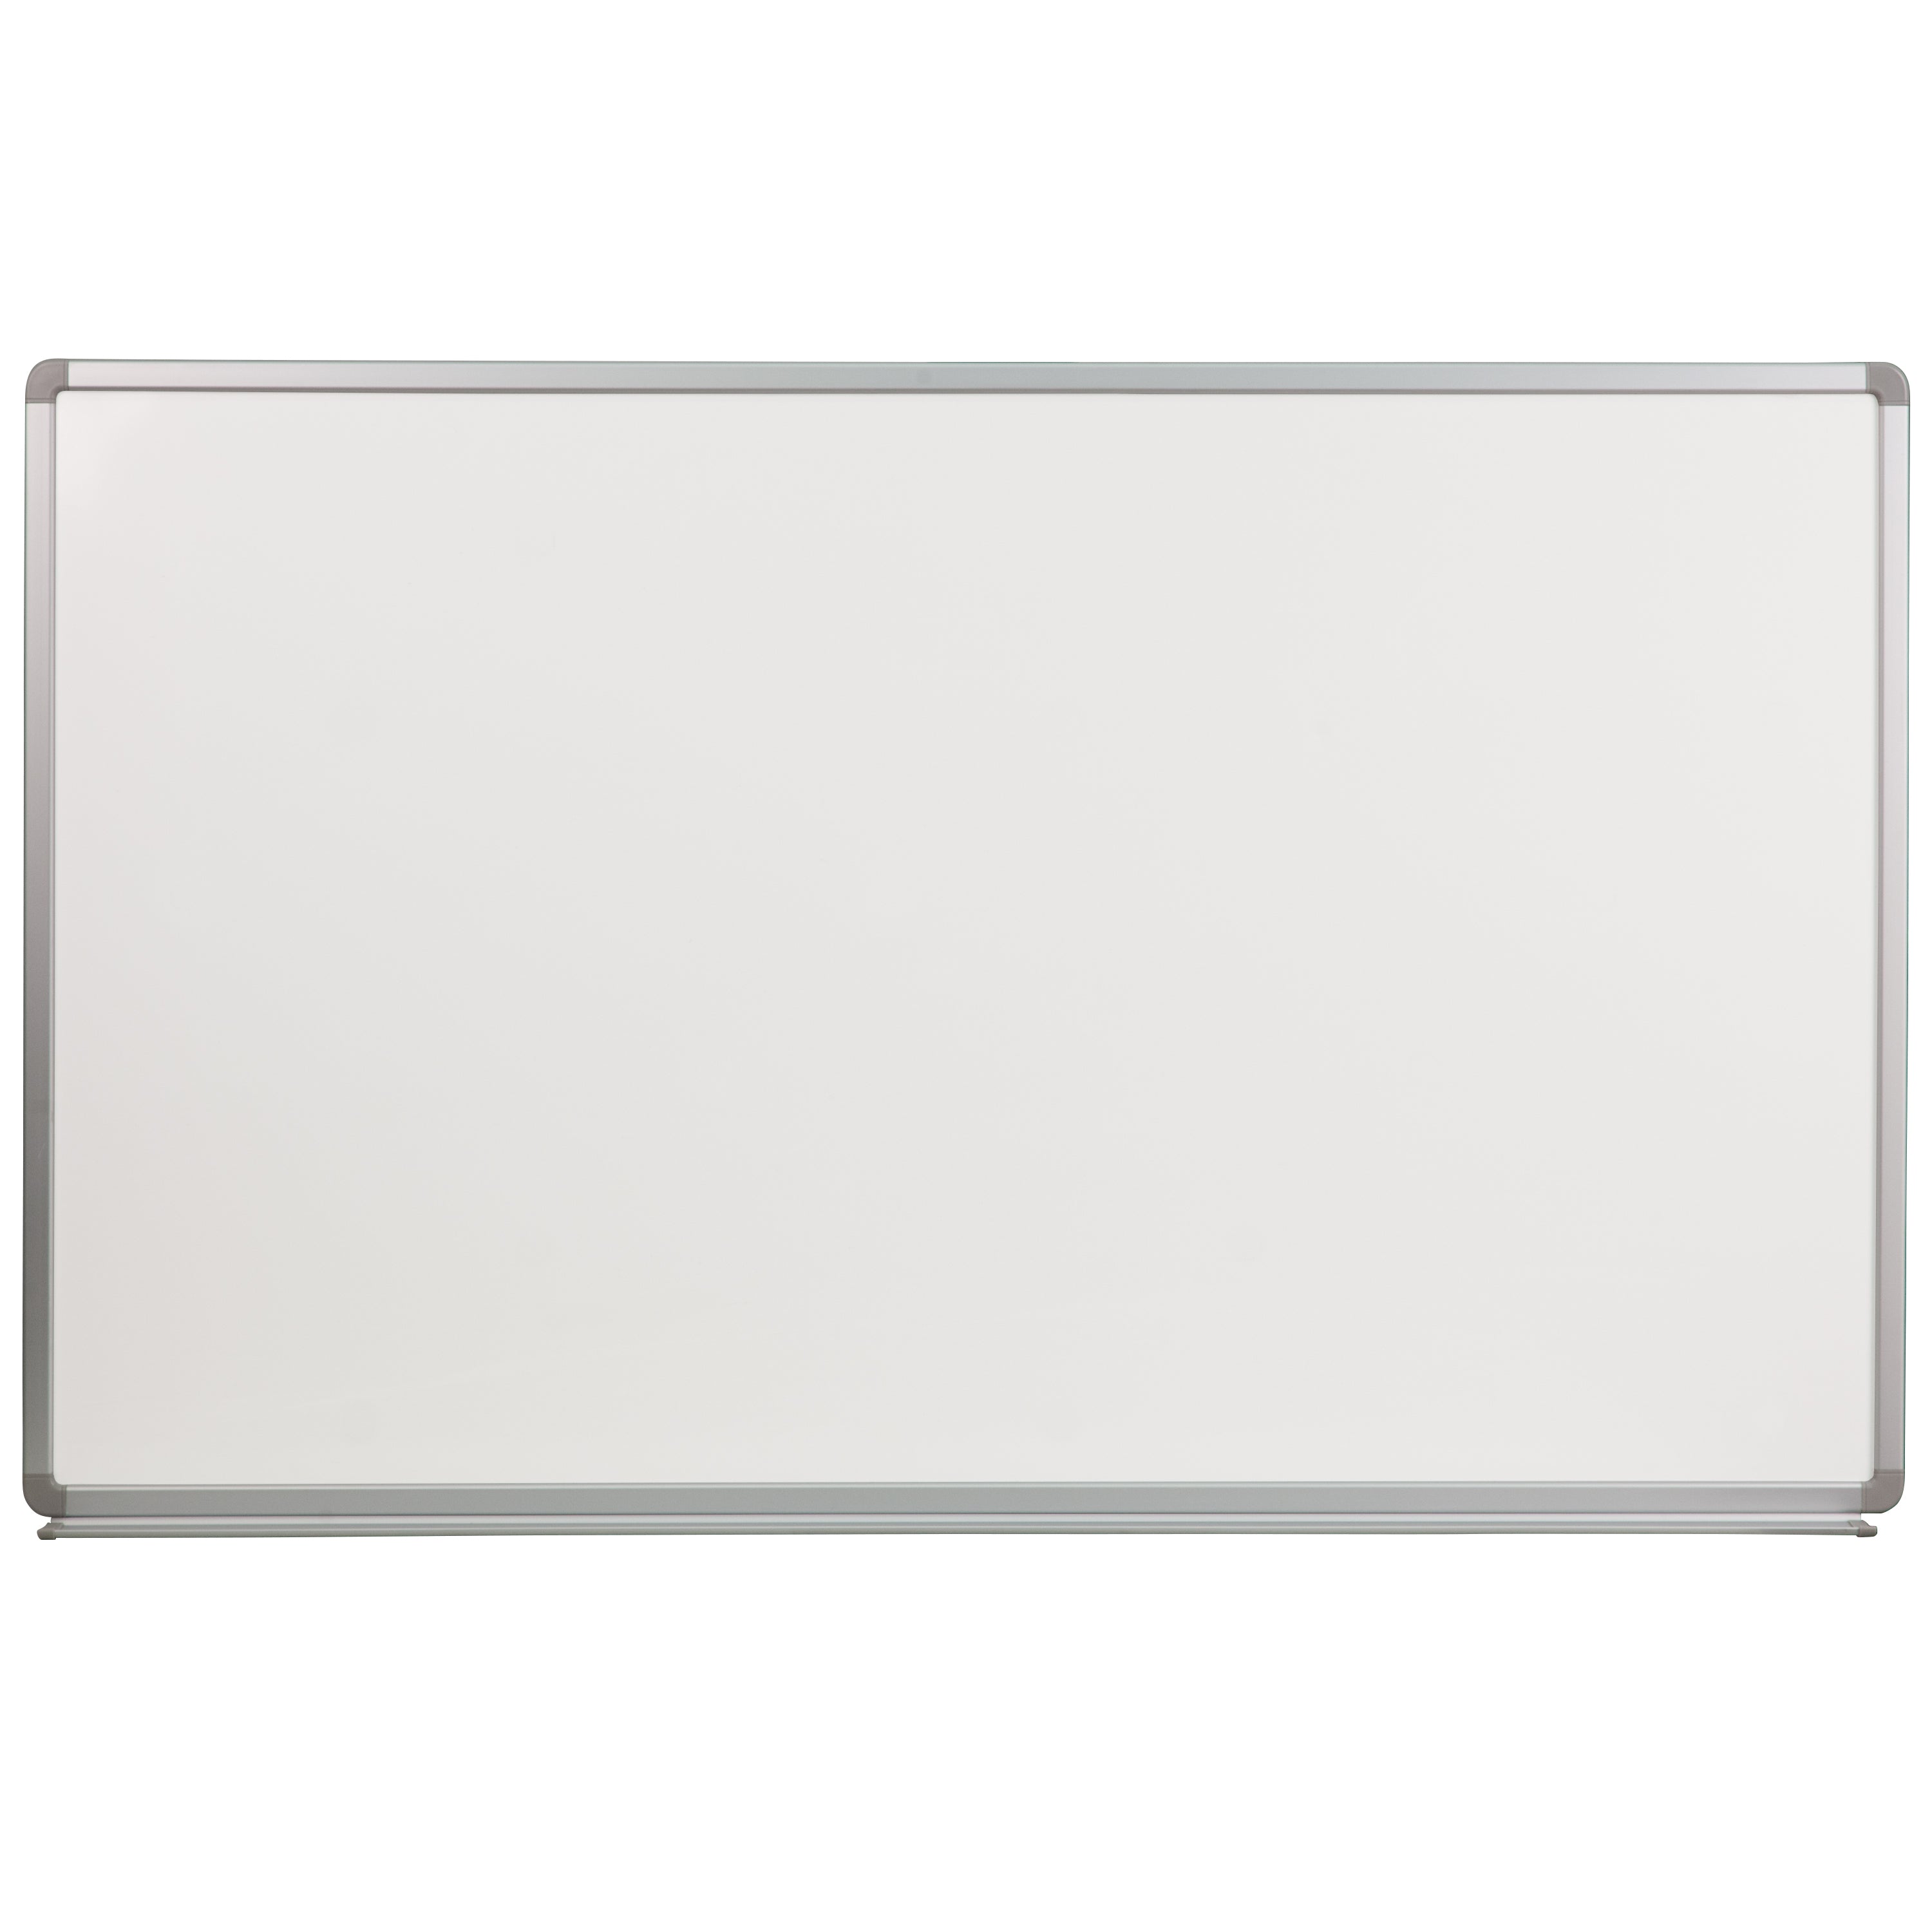 5' W x 3' H Porcelain Magnetic Marker Board-Marker Boards-Flash Furniture-Wall2Wall Furnishings